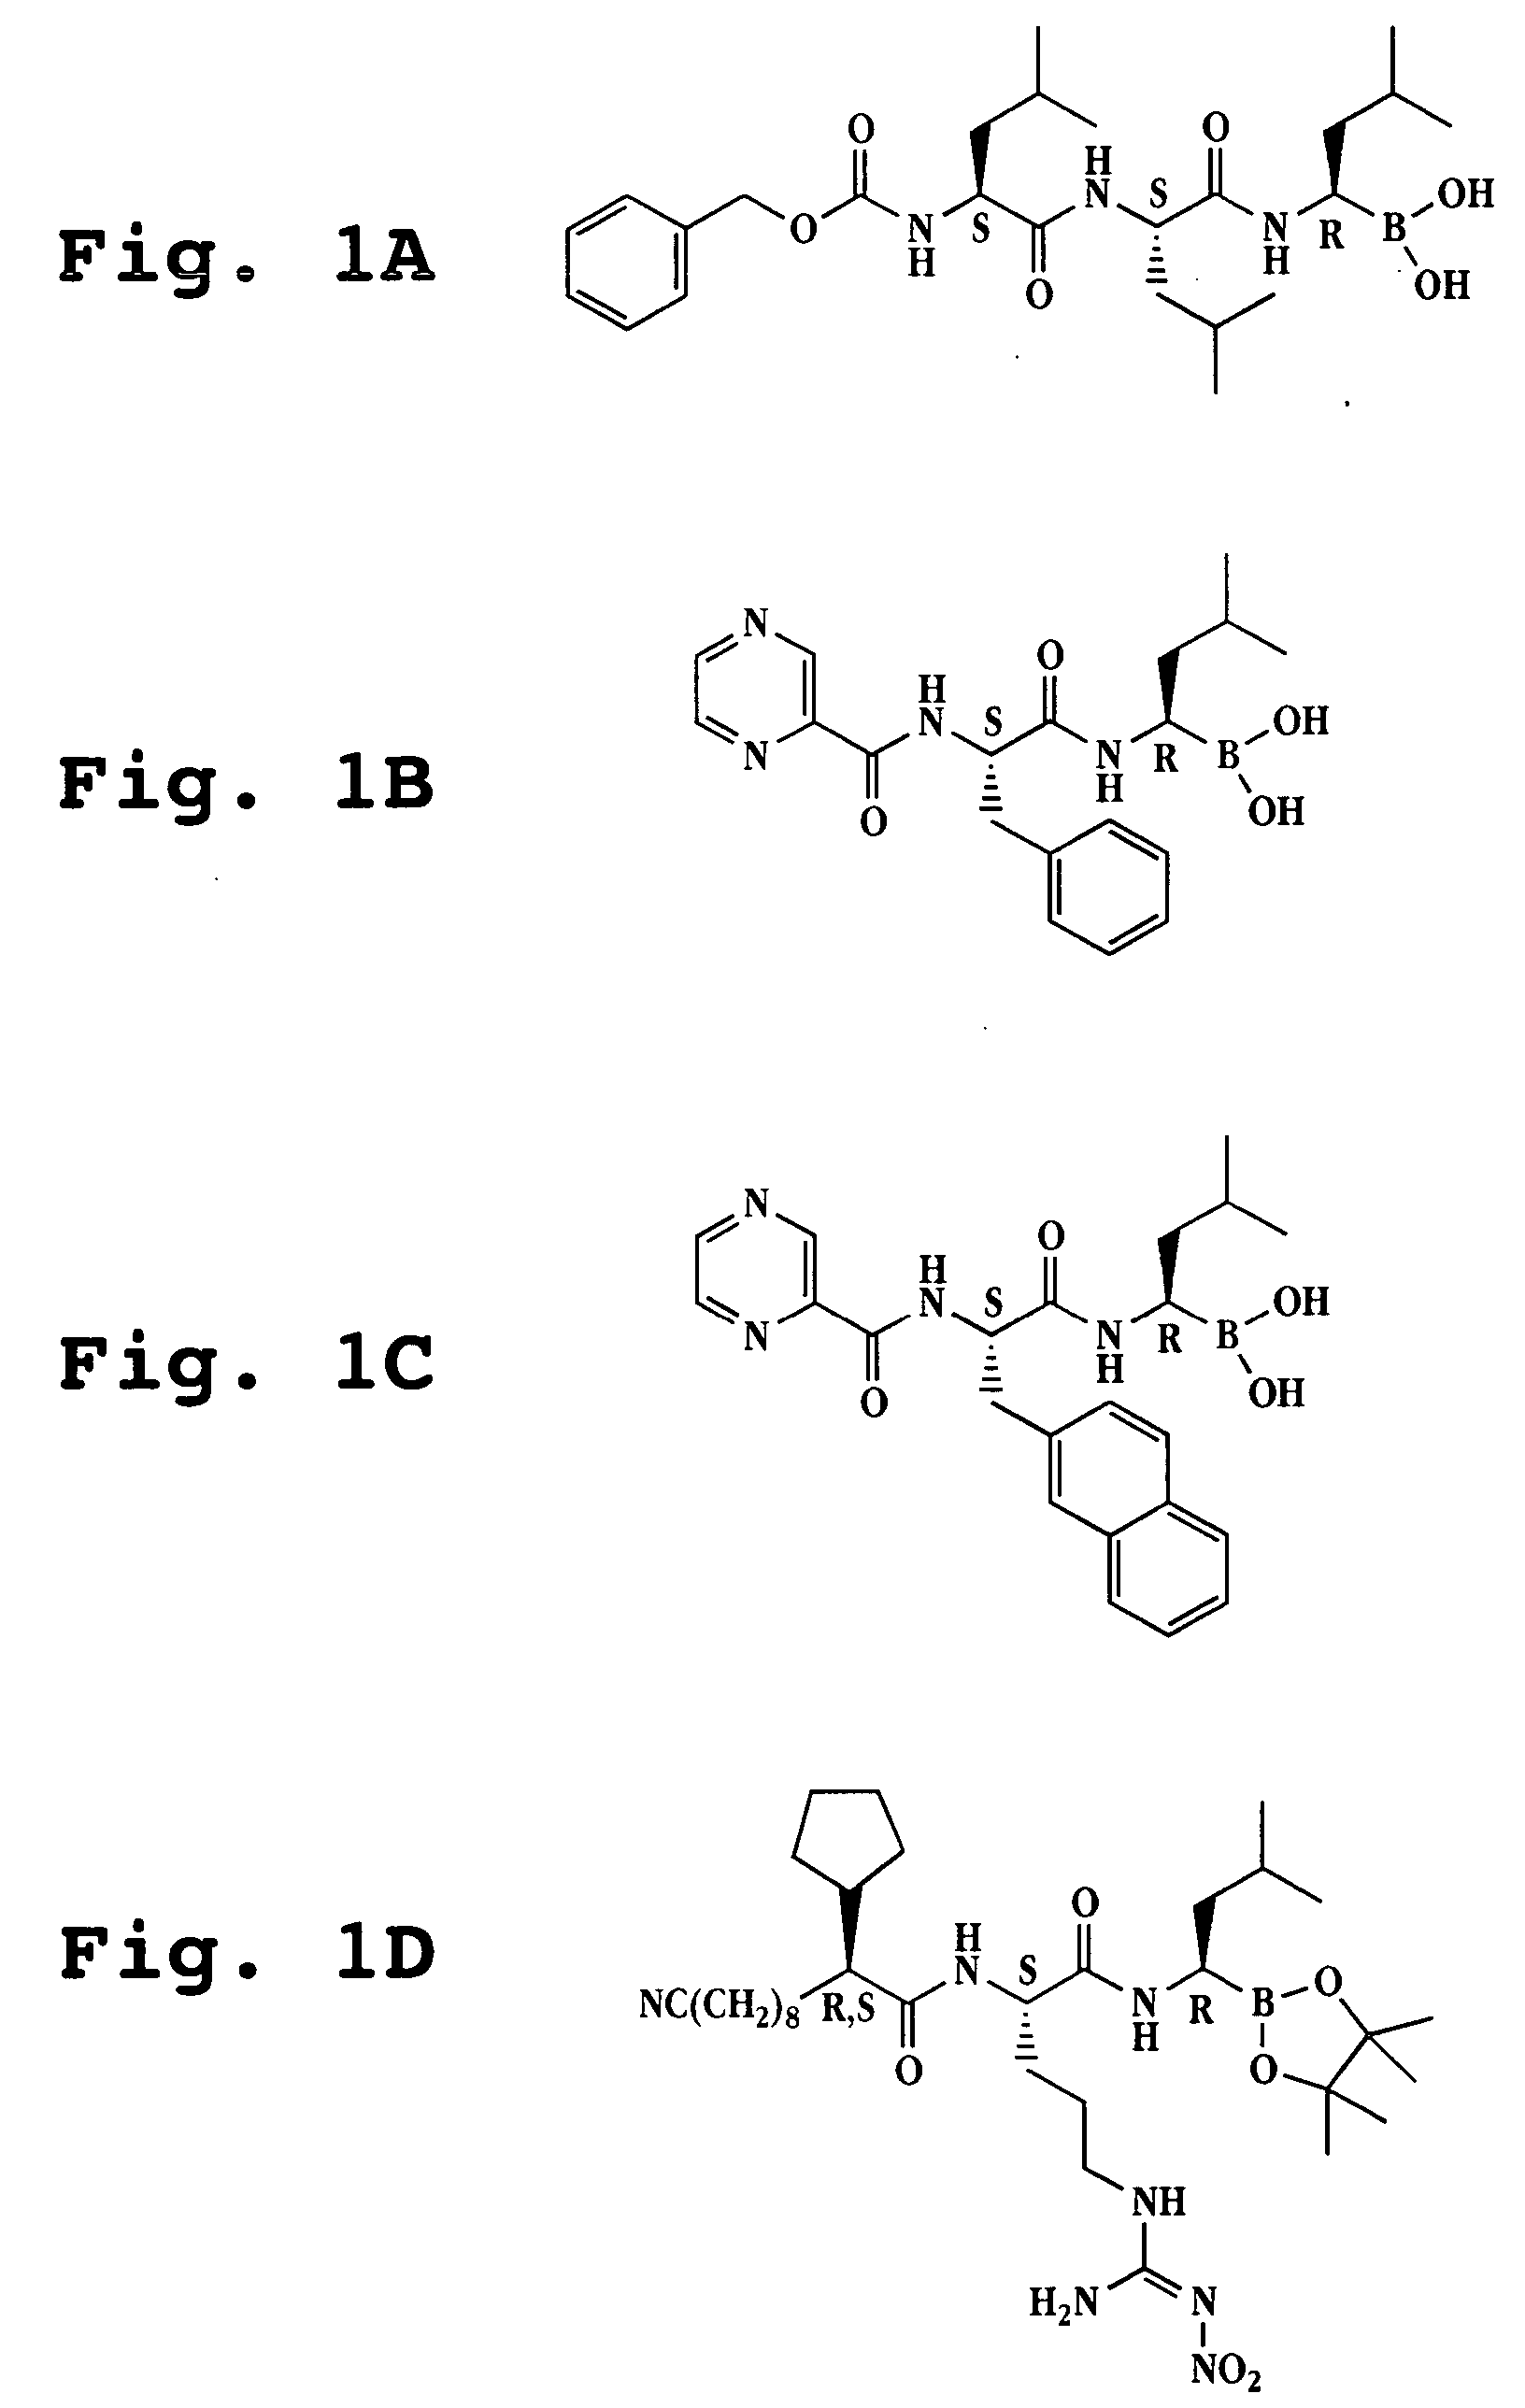 Liposome formulations of boronic acid compounds